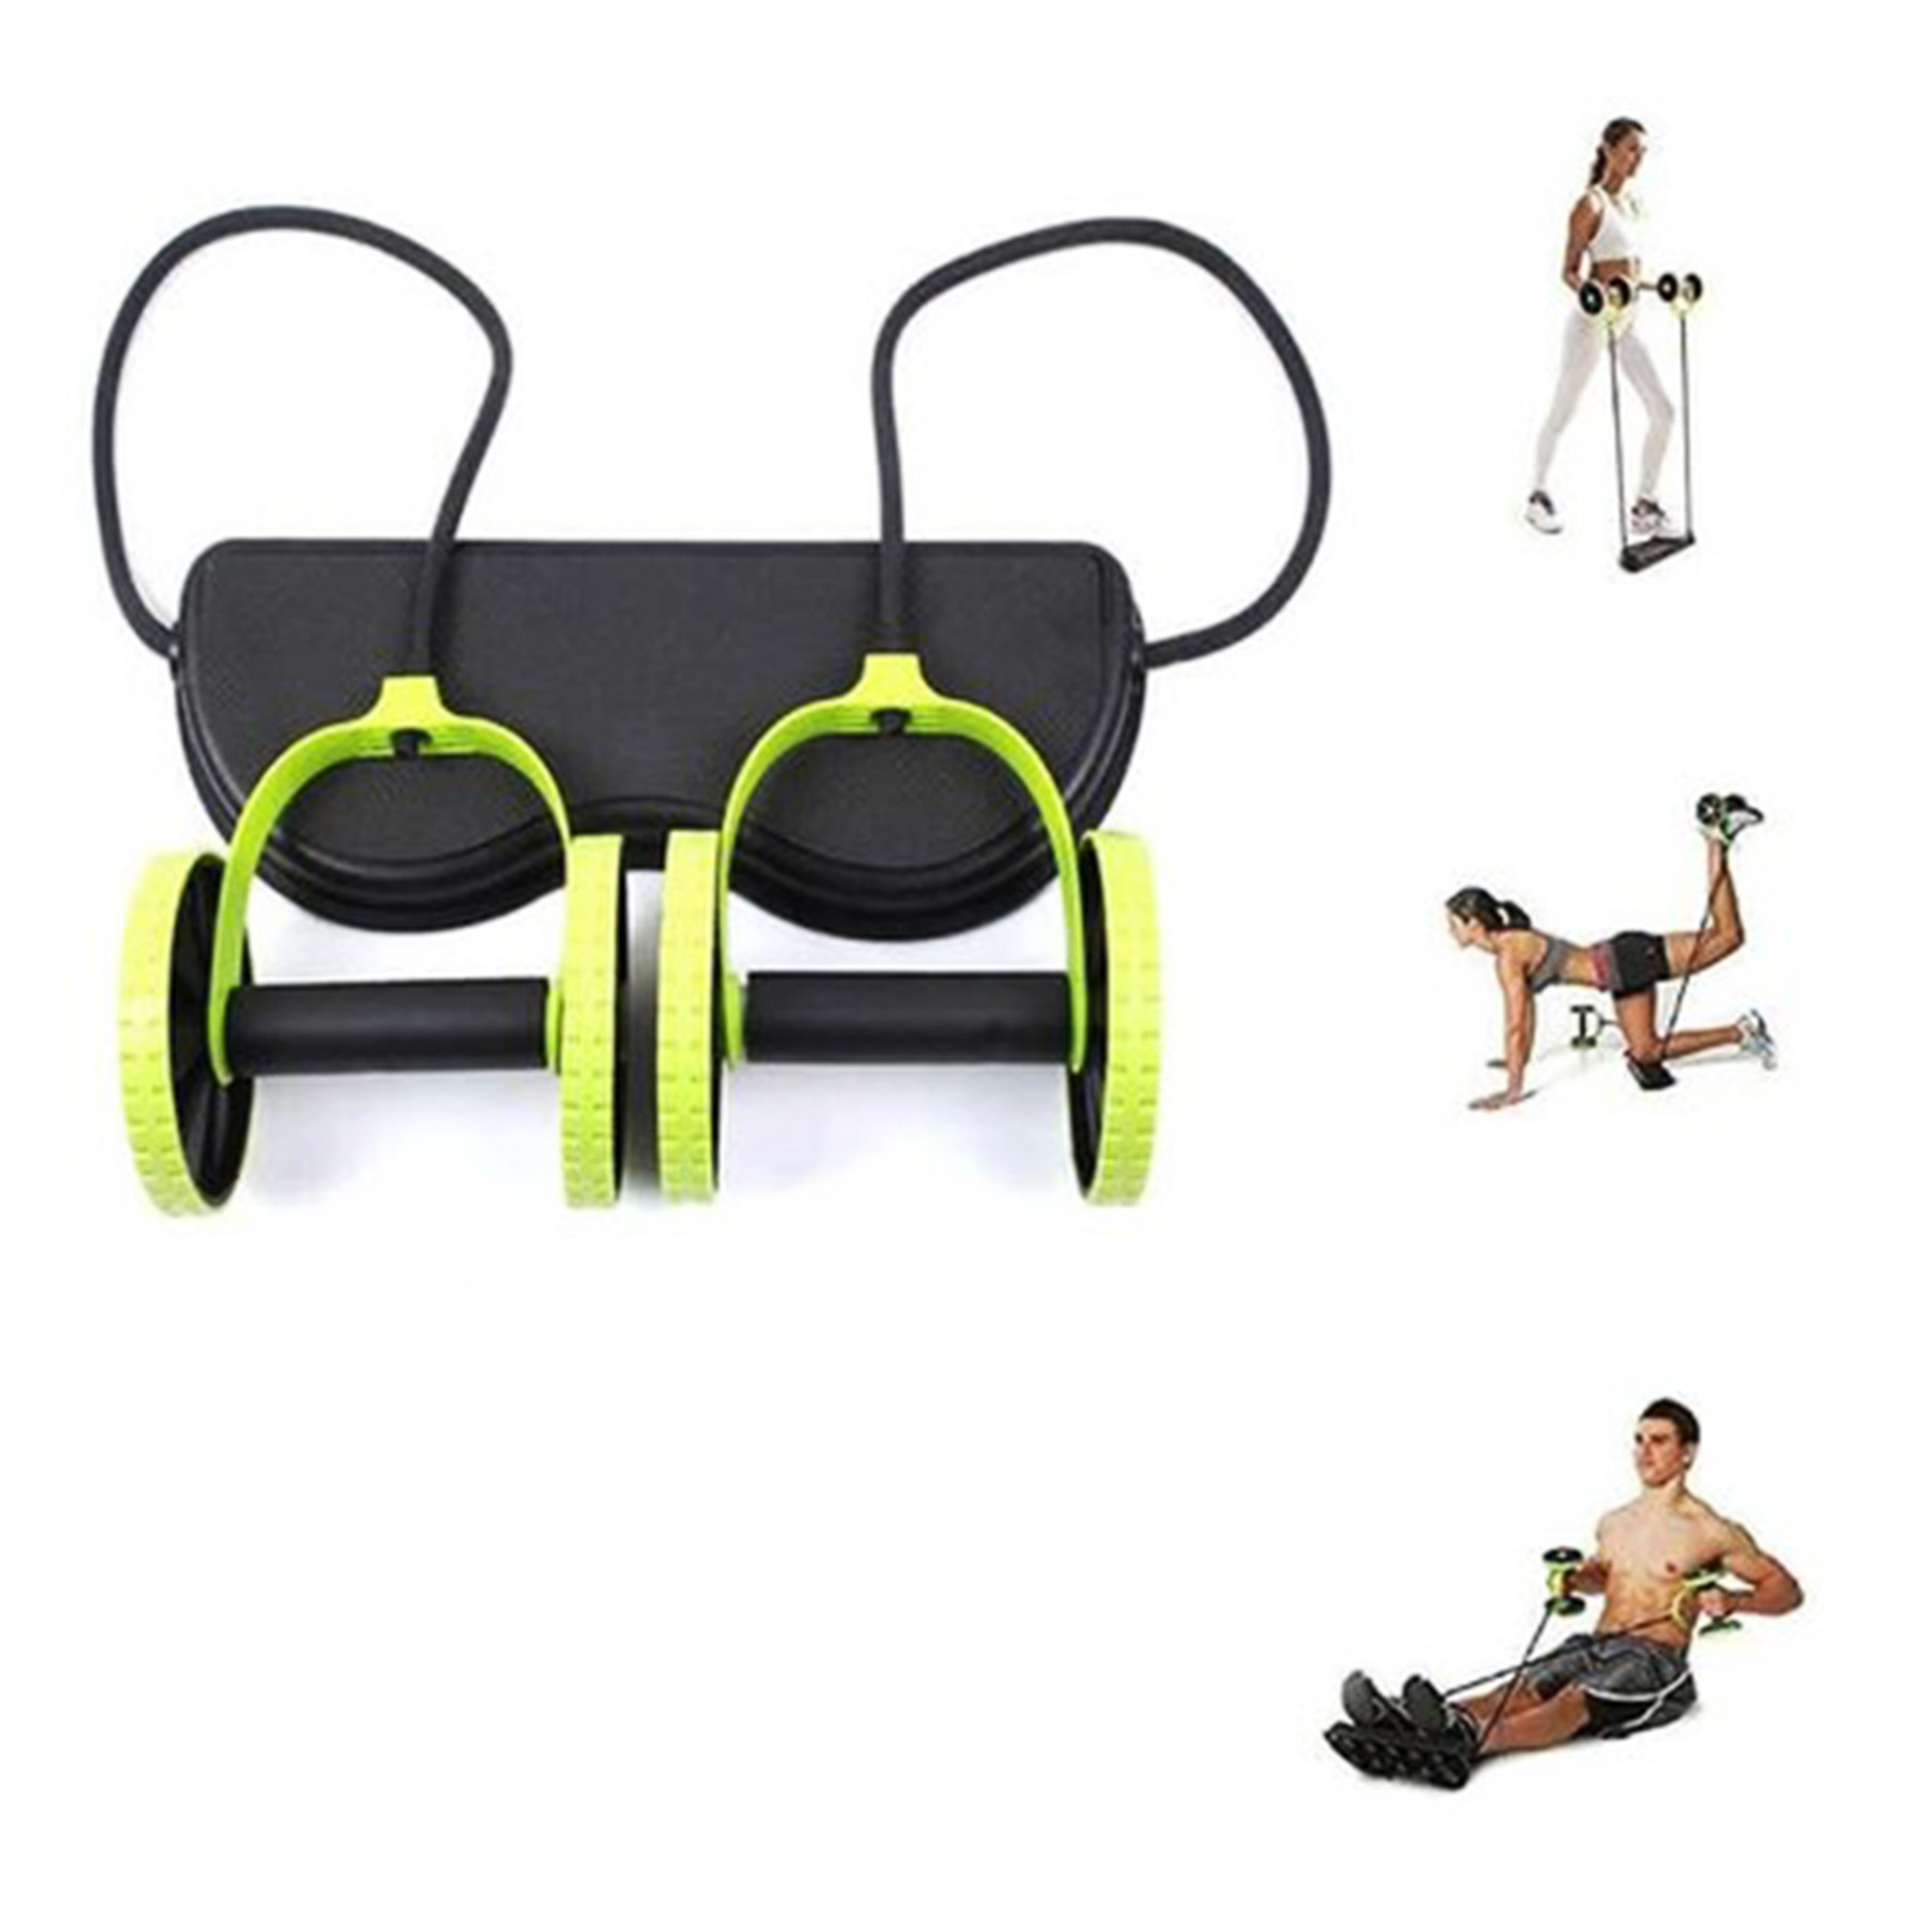 Ab Roller Wheel , Ab Wheel Exercise Equipment for Home Gym, Ab